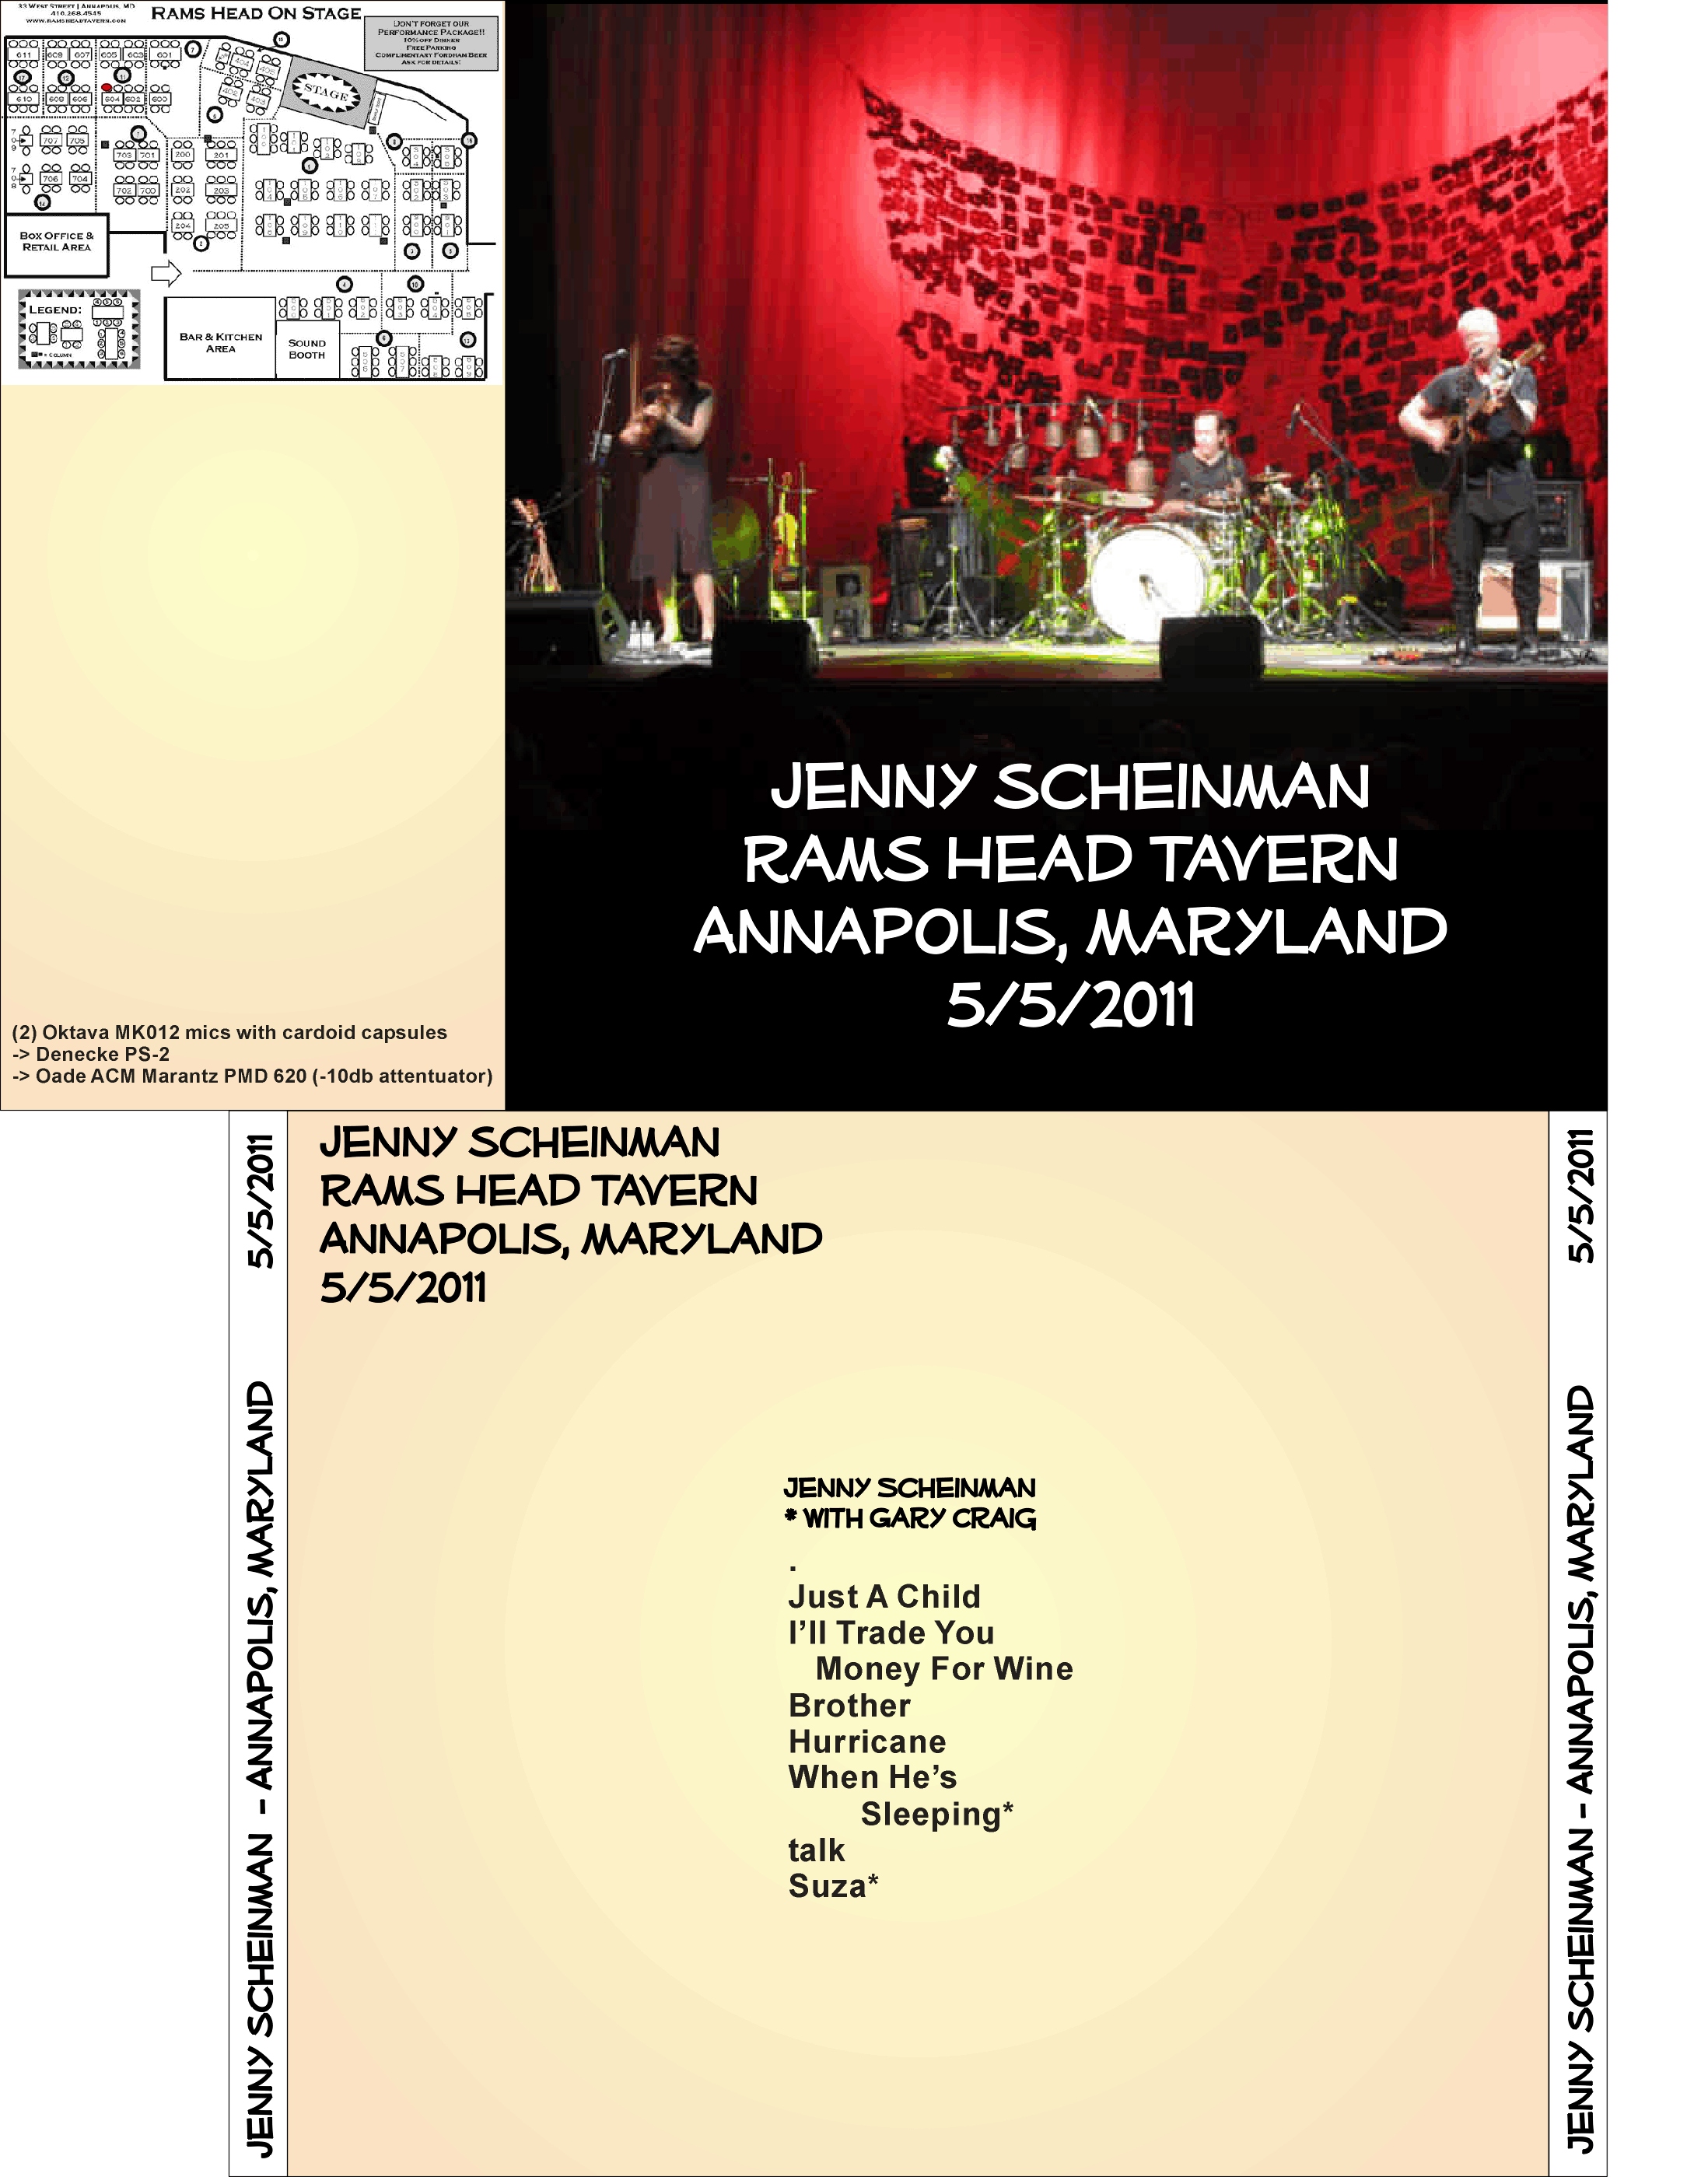 JennyScheinman2011-05-05RamsHeadTavernAnnapolisMD.JPG